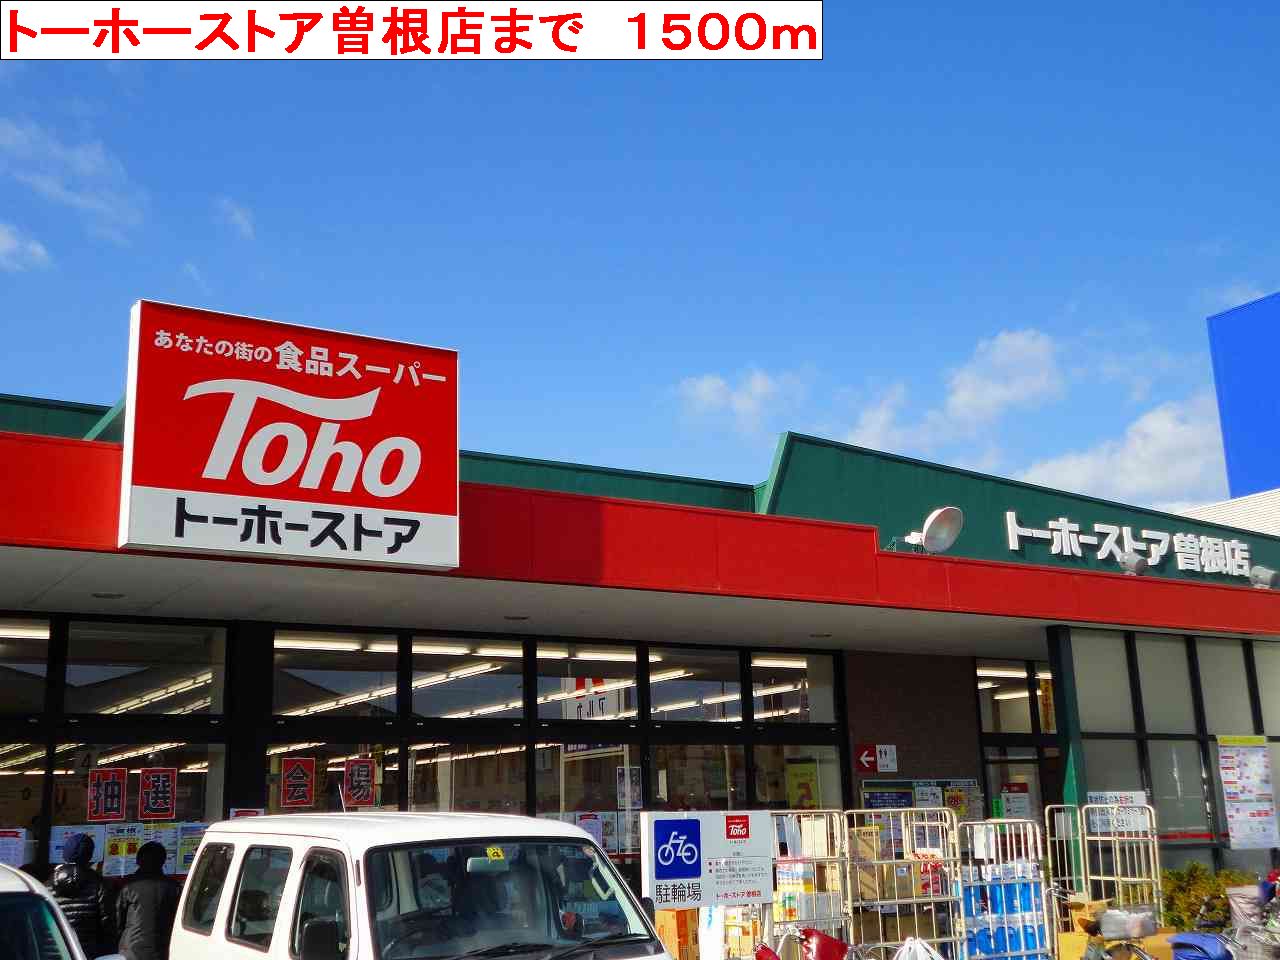 Supermarket. Toho store Sone store up to (super) 1500m